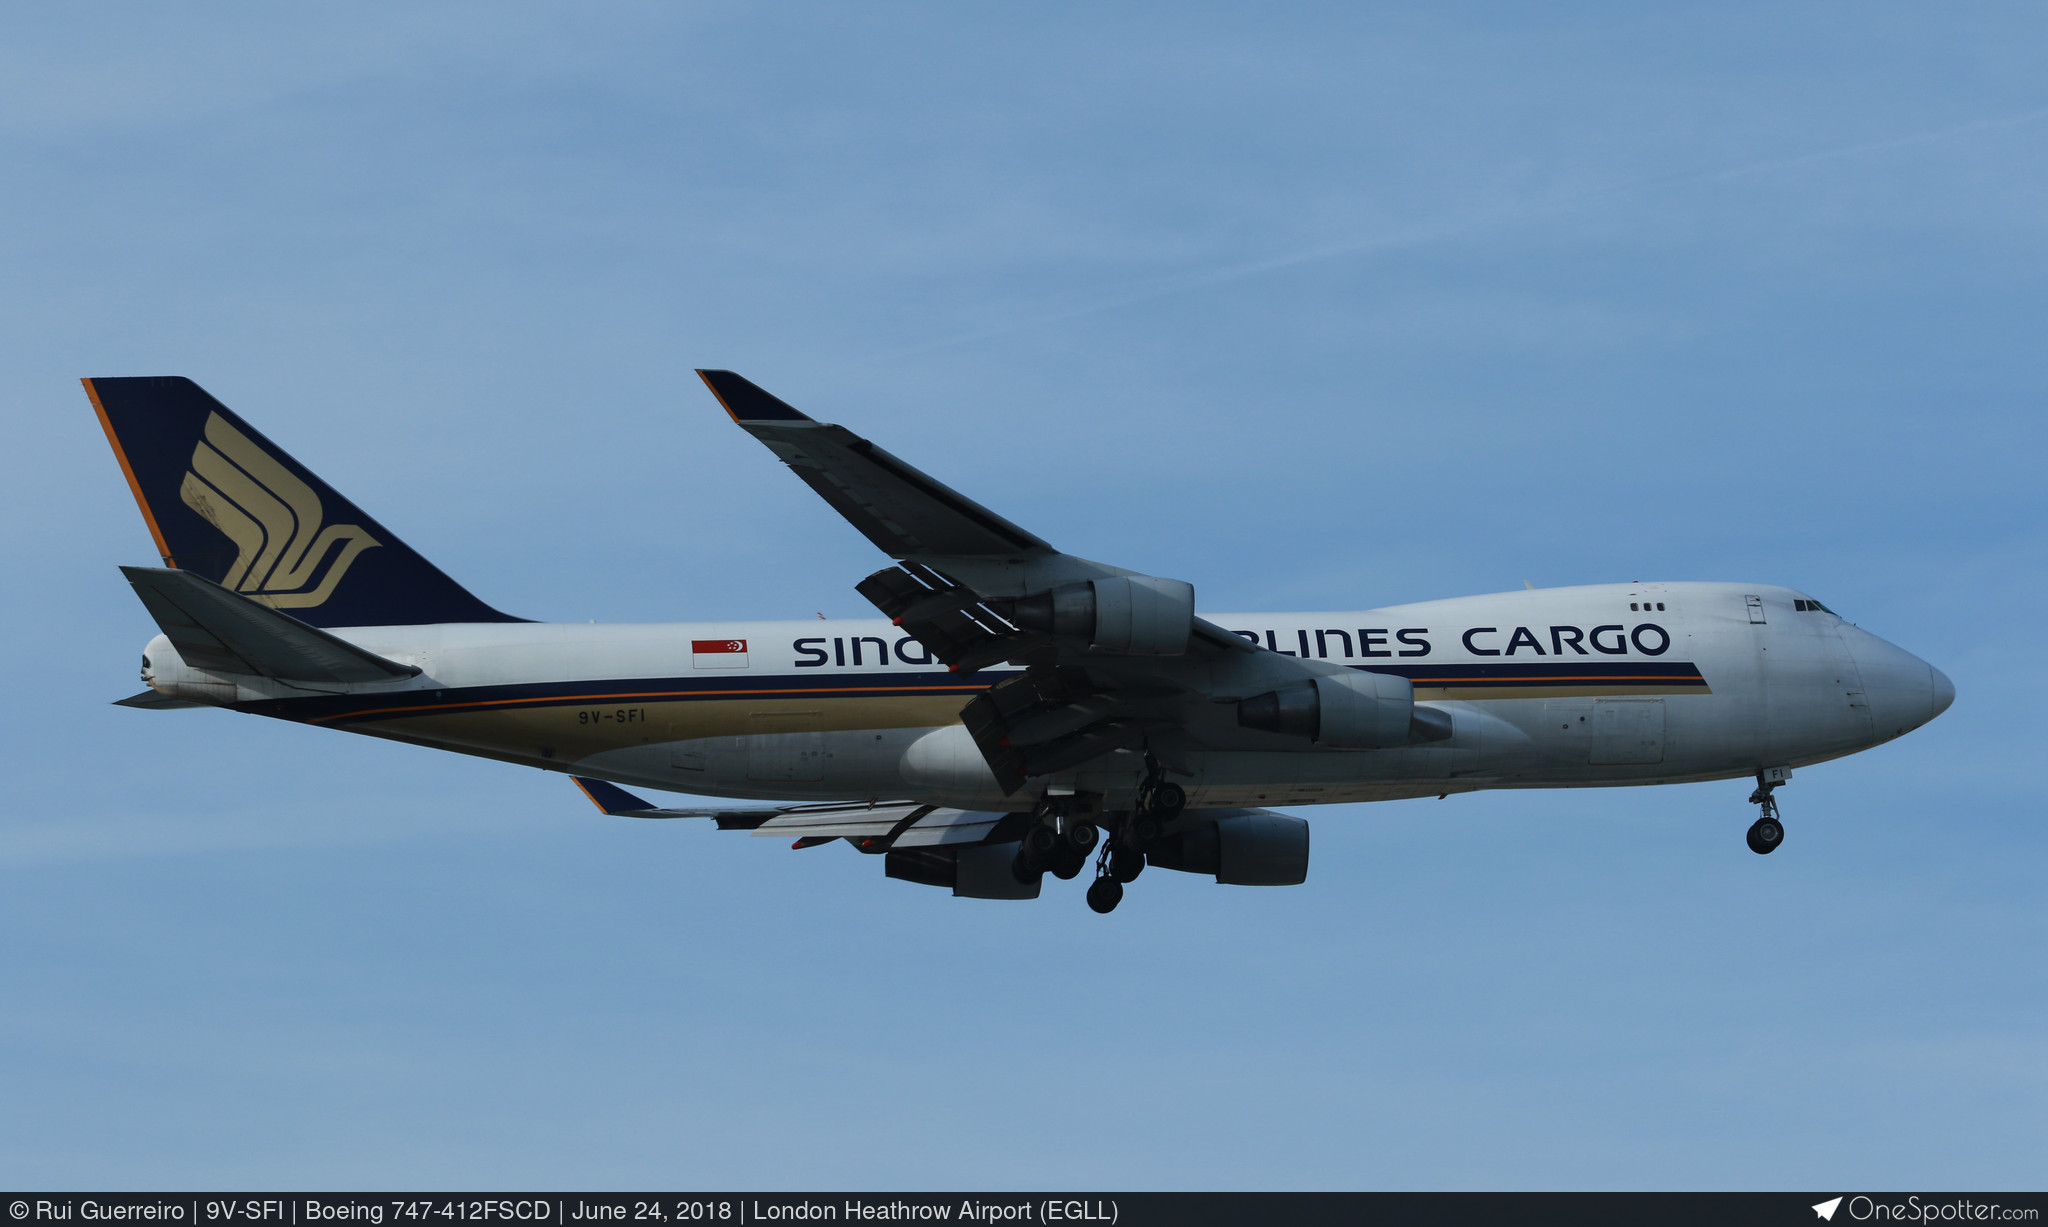 9V-SFI Singapore Airlines Boeing 747-412FSCD, MSN 28027 